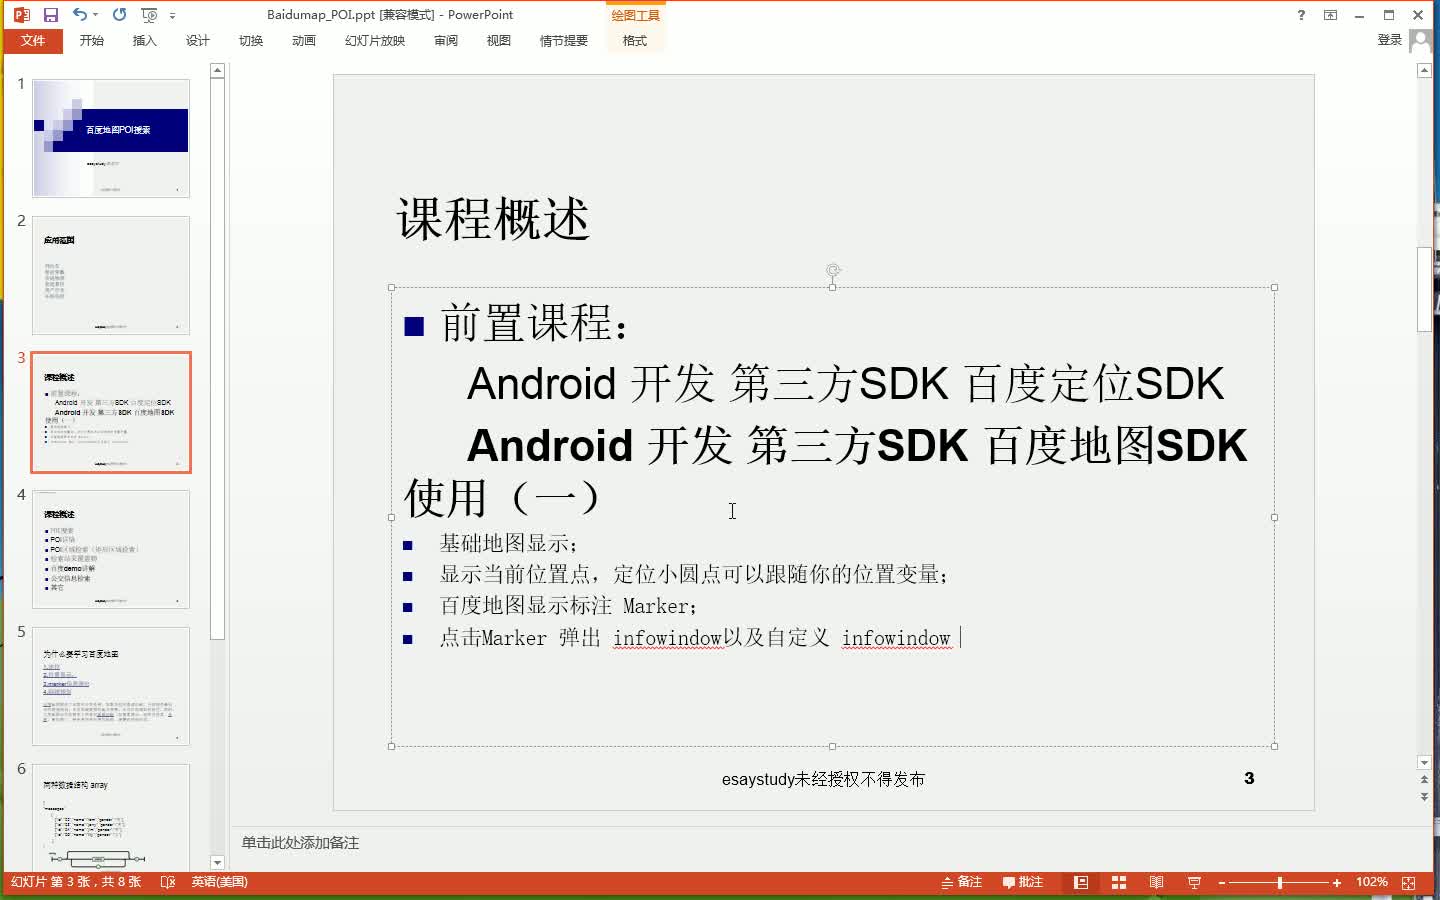 Android 百度地图SDK POI 搜索